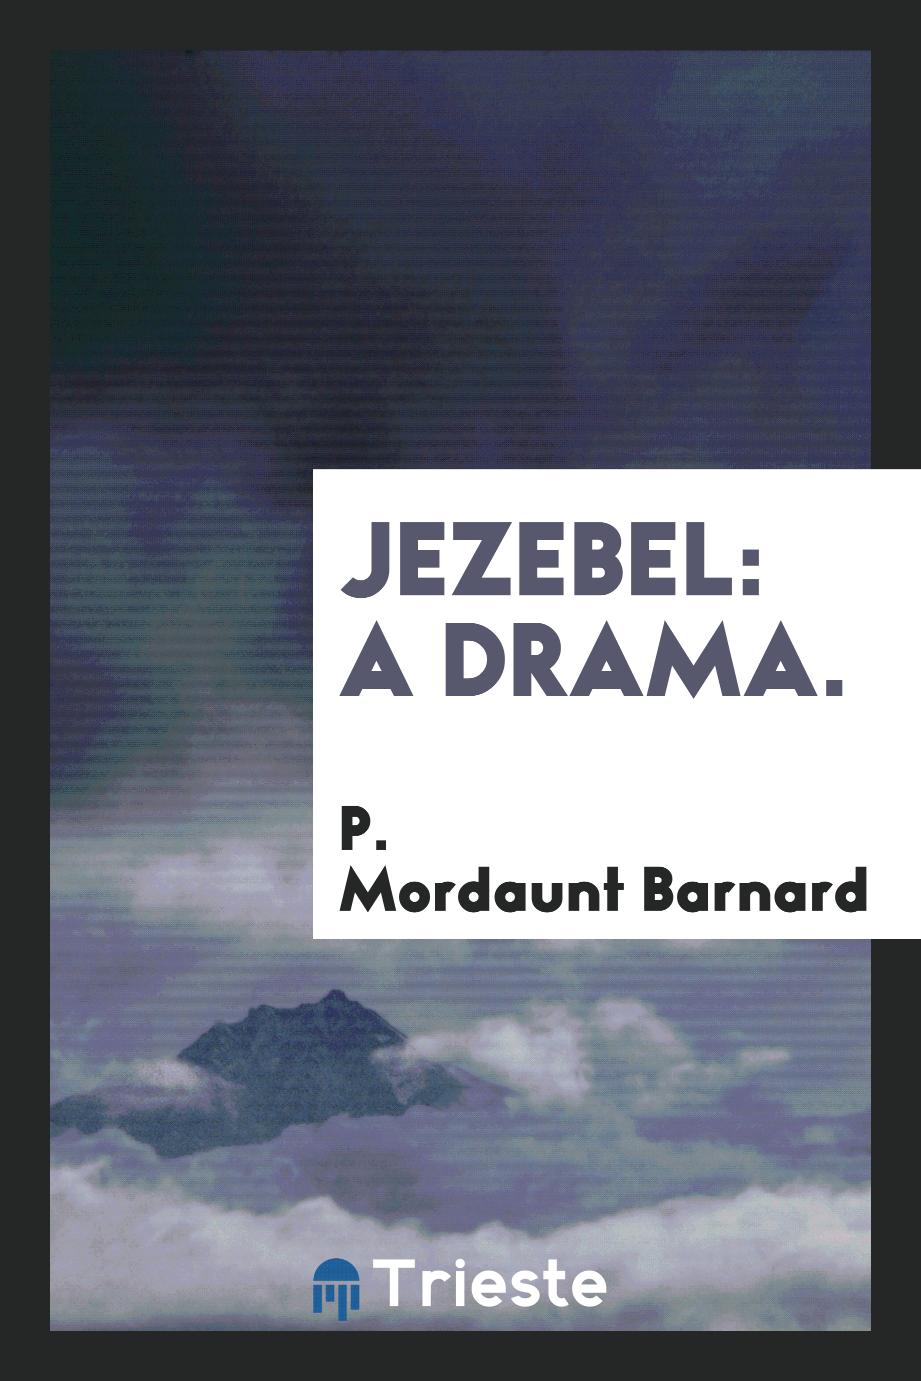 Jezebel: A Drama.